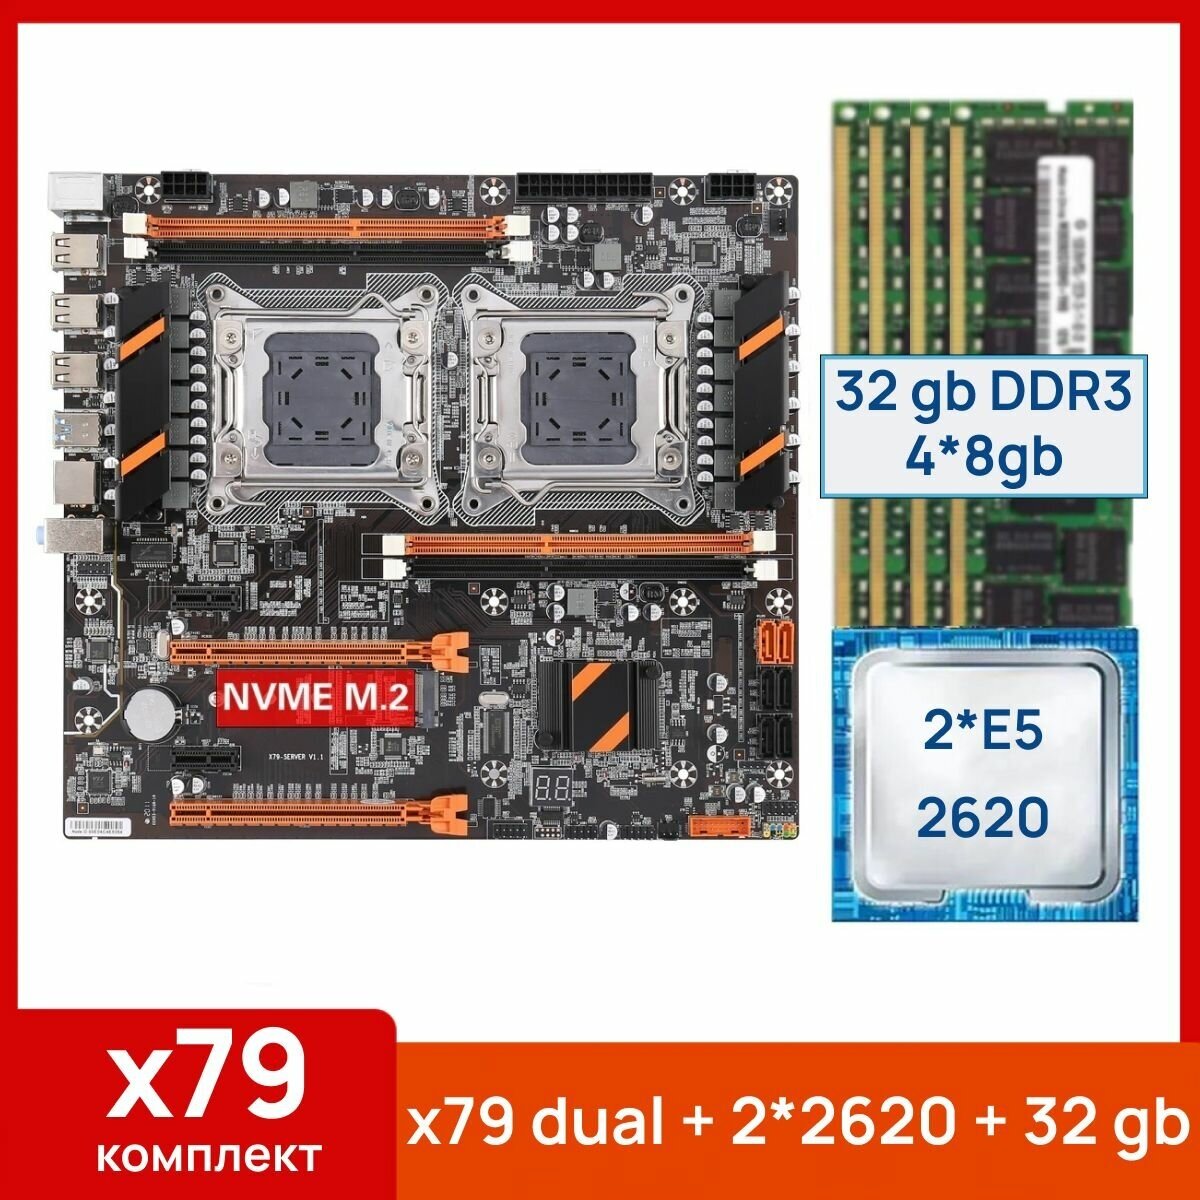 Комплект: Atermiter x79 dual + Xeon E5 2620*2 + 32 gb(4x8gb) DDR3 ecc reg